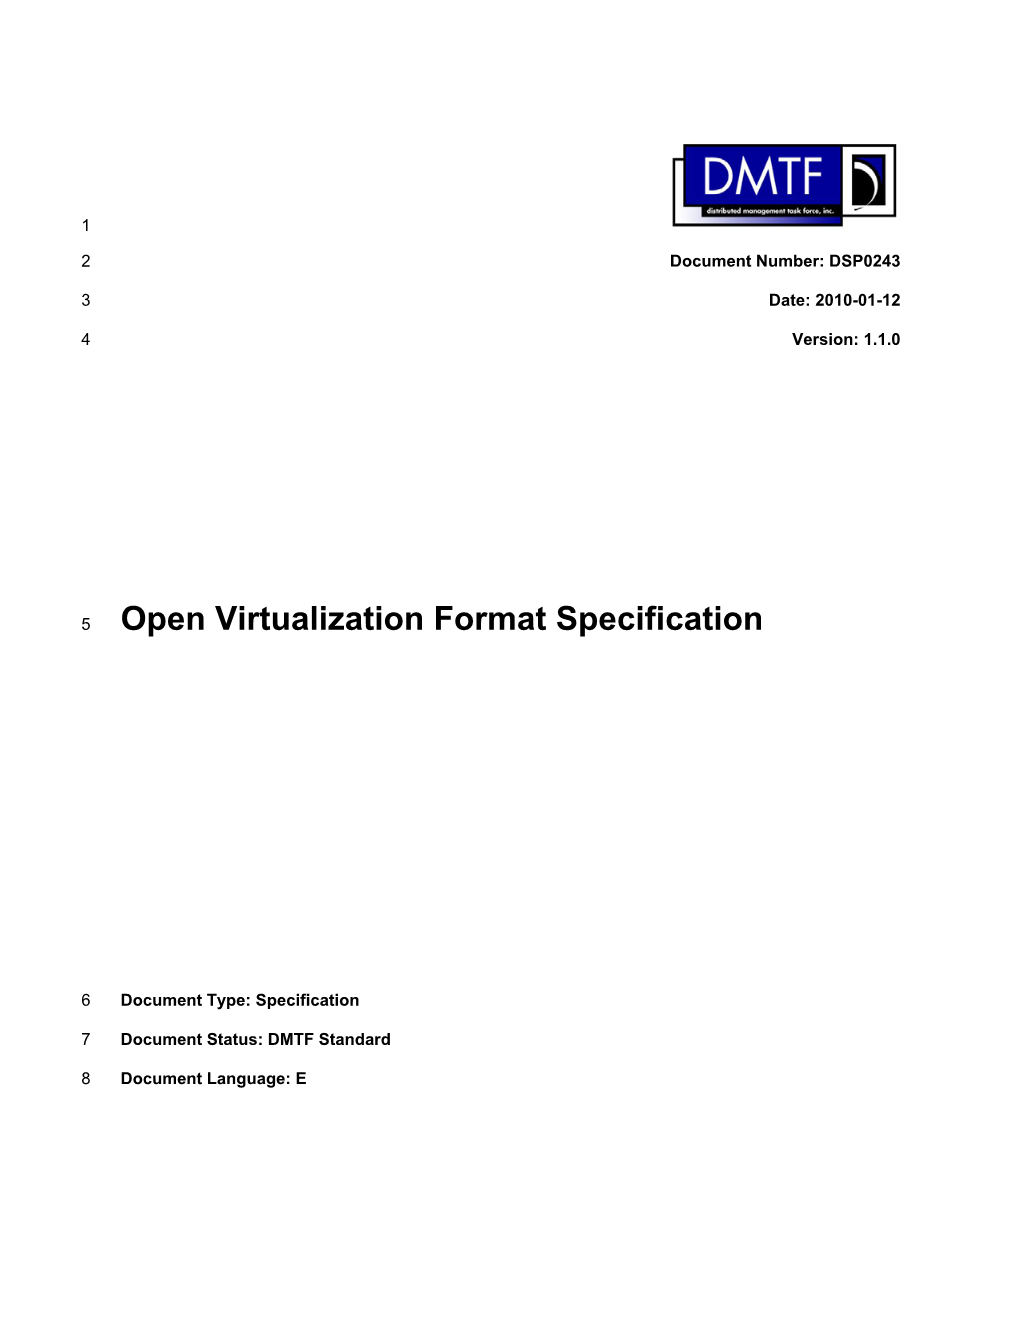 Open Virtualization Format (OVF) Specification